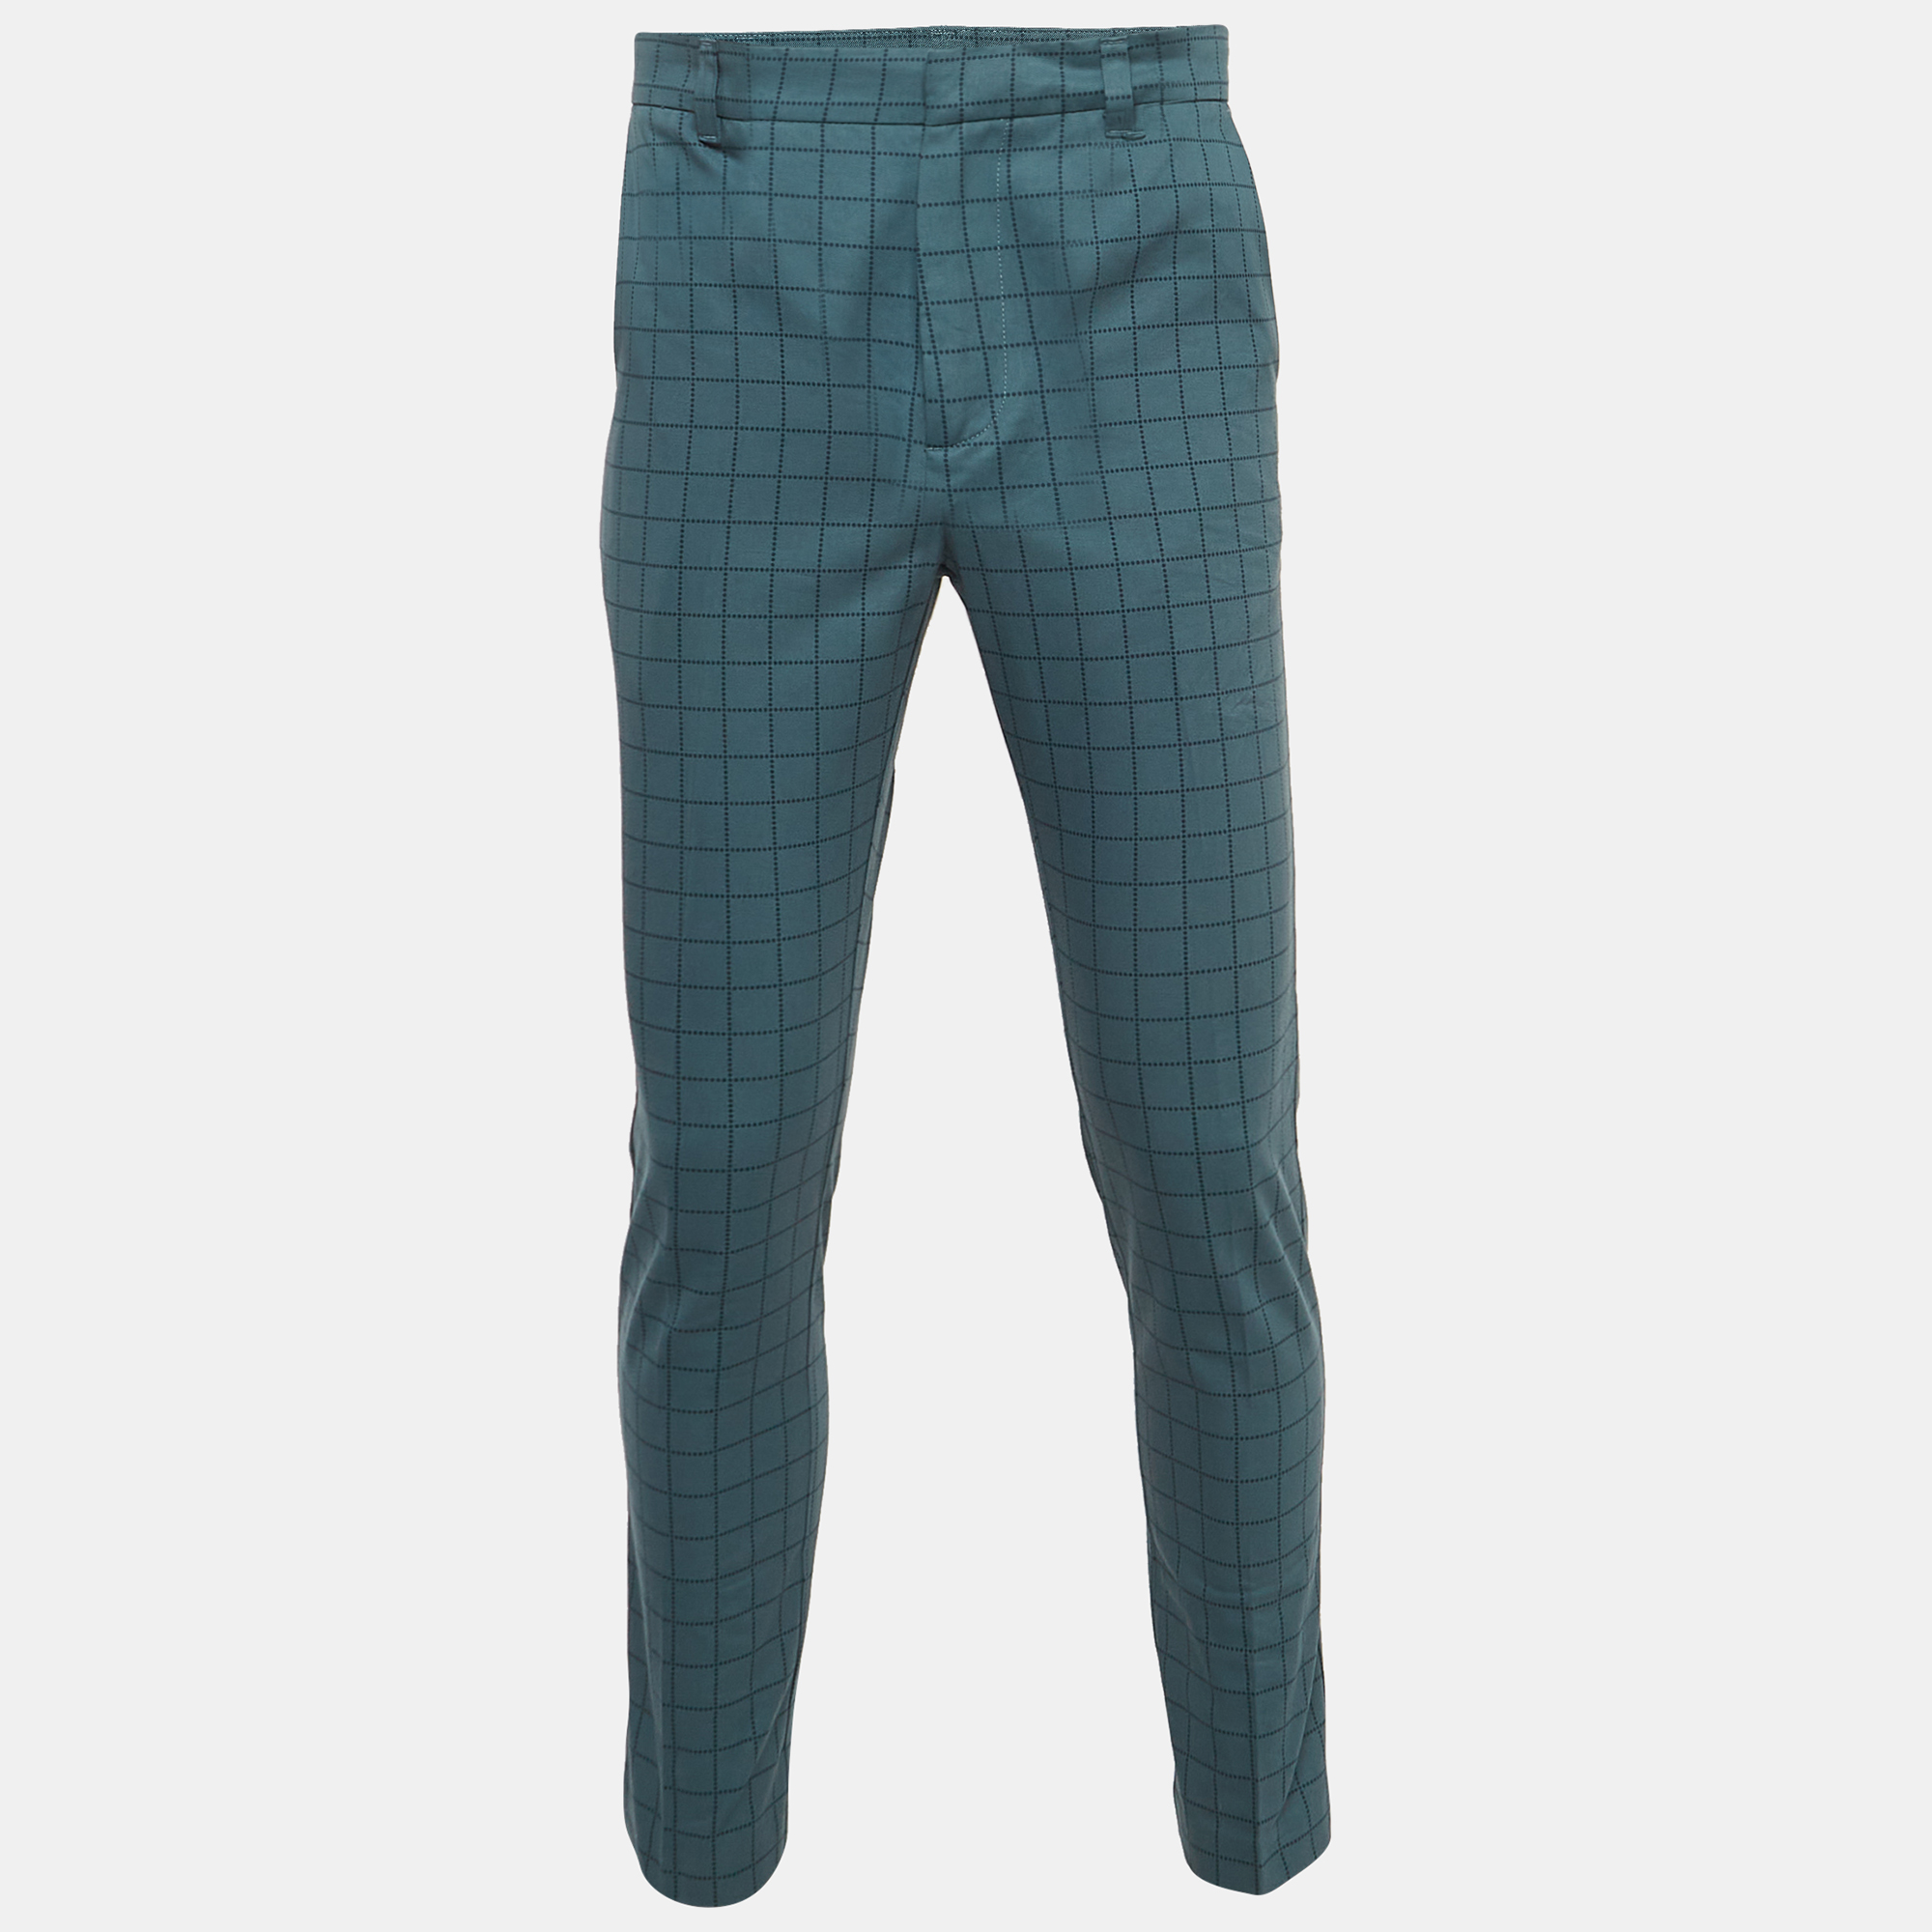 Bottega veneta blue grid check cotton formal trousers s